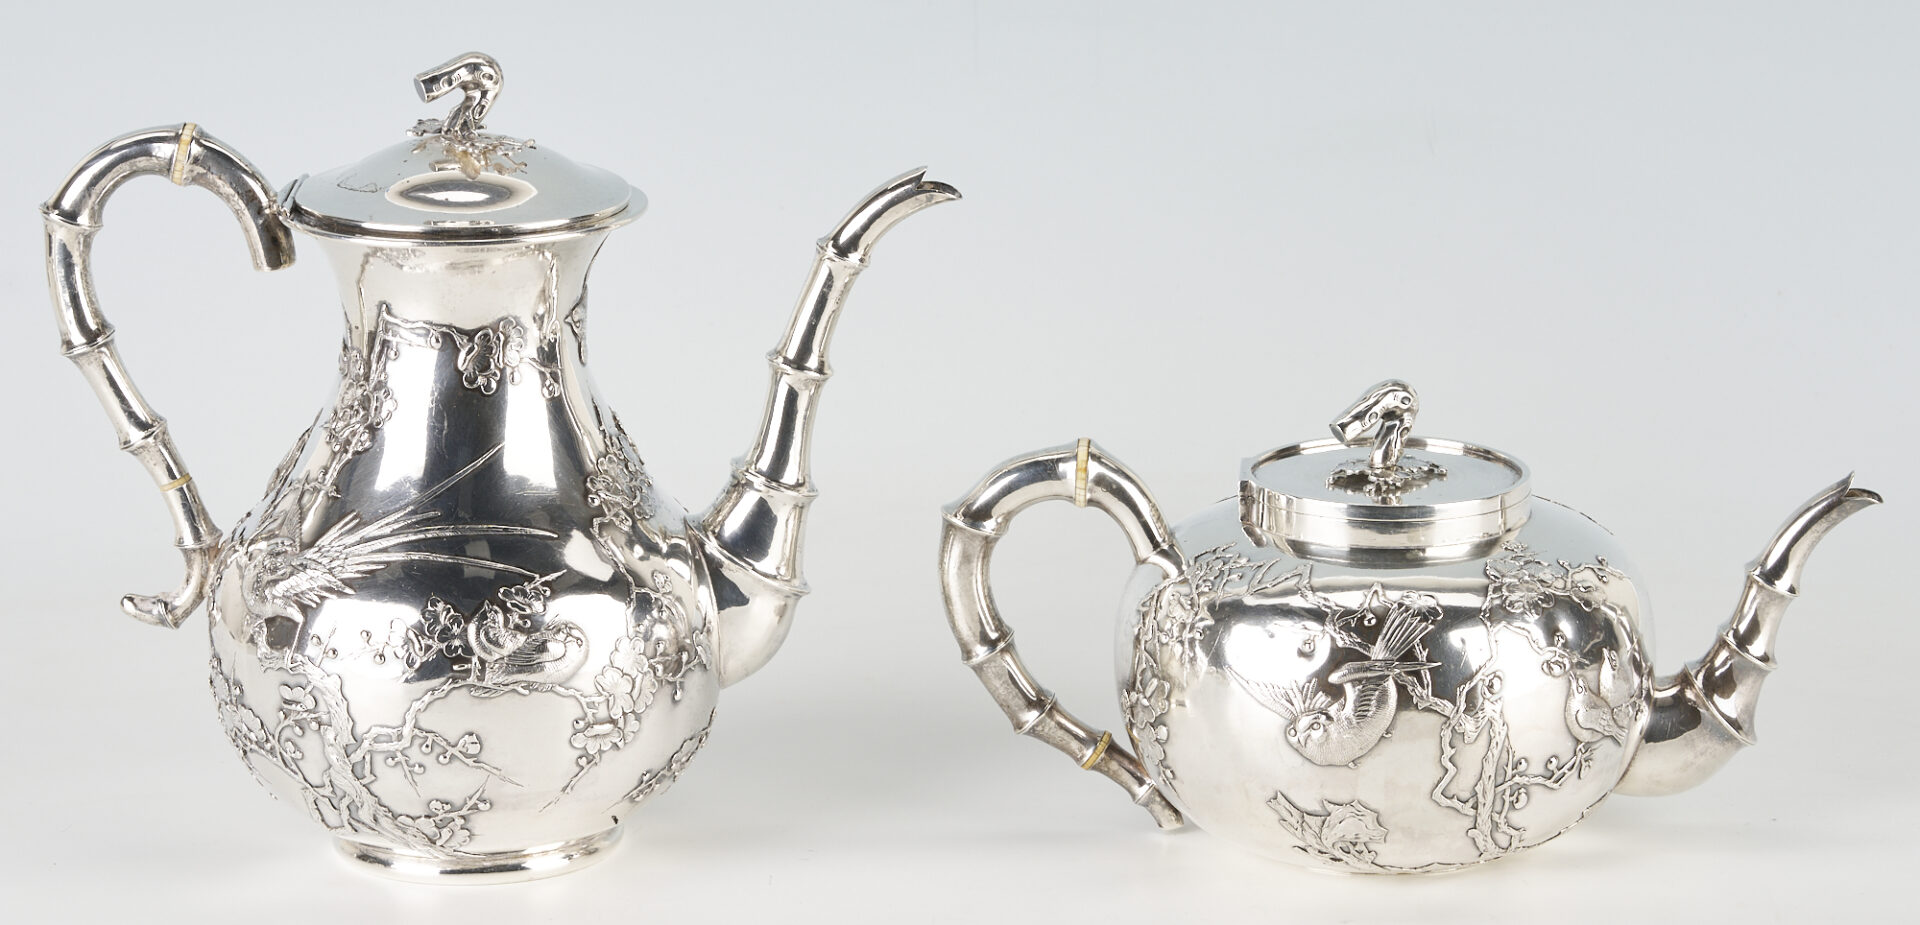 Lot 1: Wang Hing Chinese Export Silver Tea Set with Tray